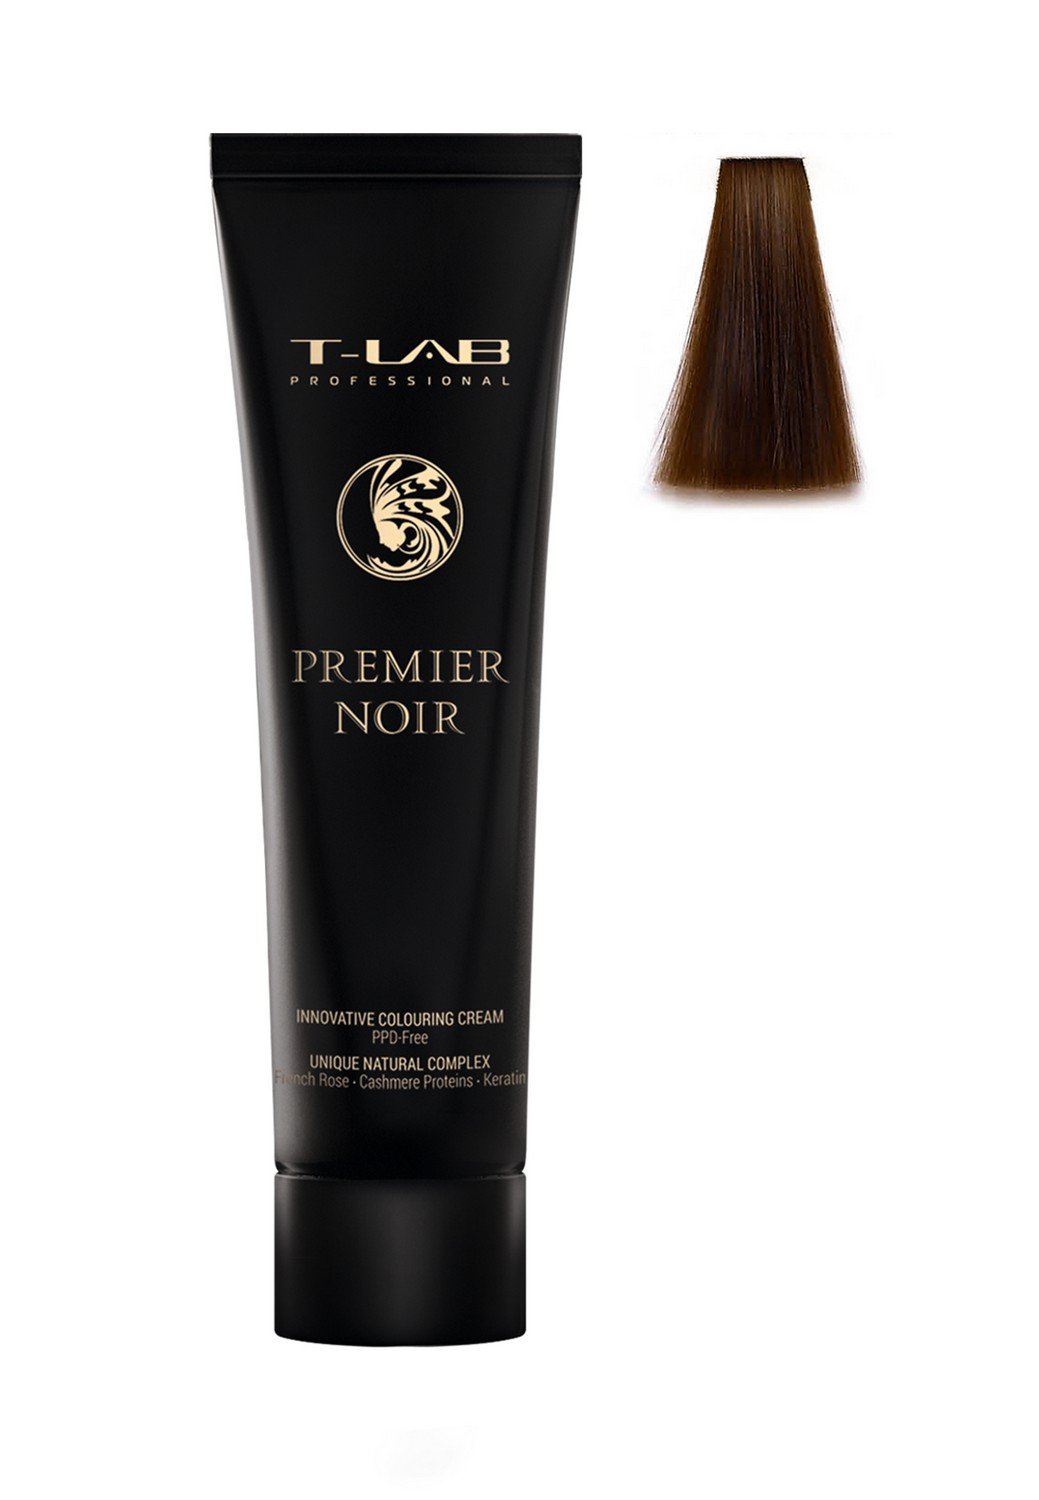 Крем-краска T-LAB Professional Premier Noir colouring cream, оттенок 6.12 (dark ash iridescent blonde) - фото 2